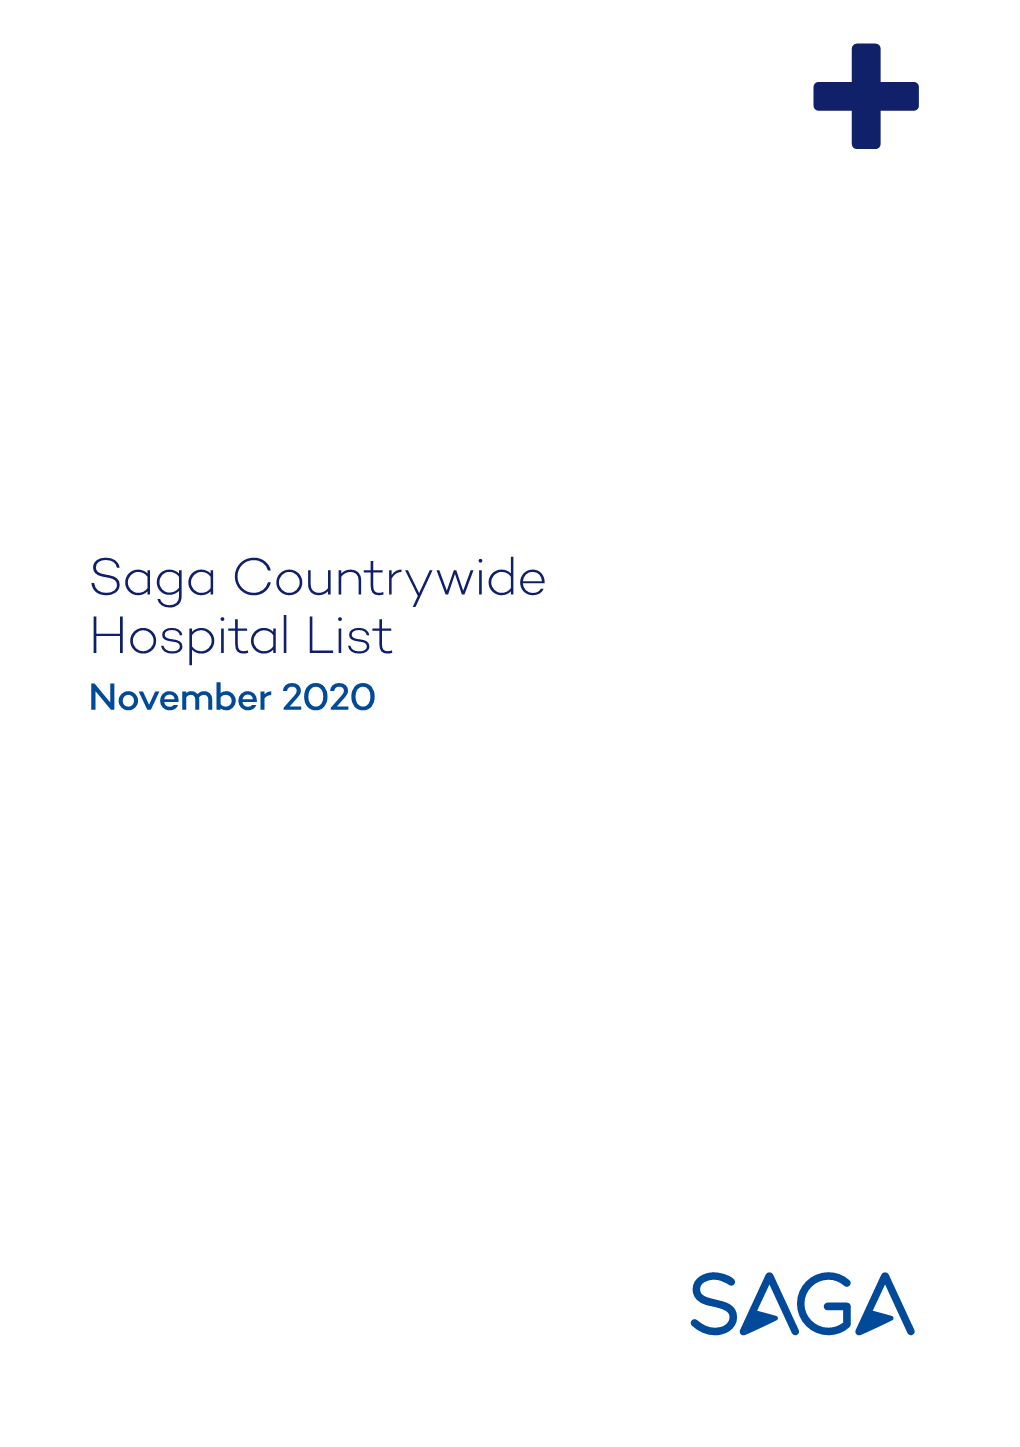 Saga Countrywide Hospital List November 2020 Contents